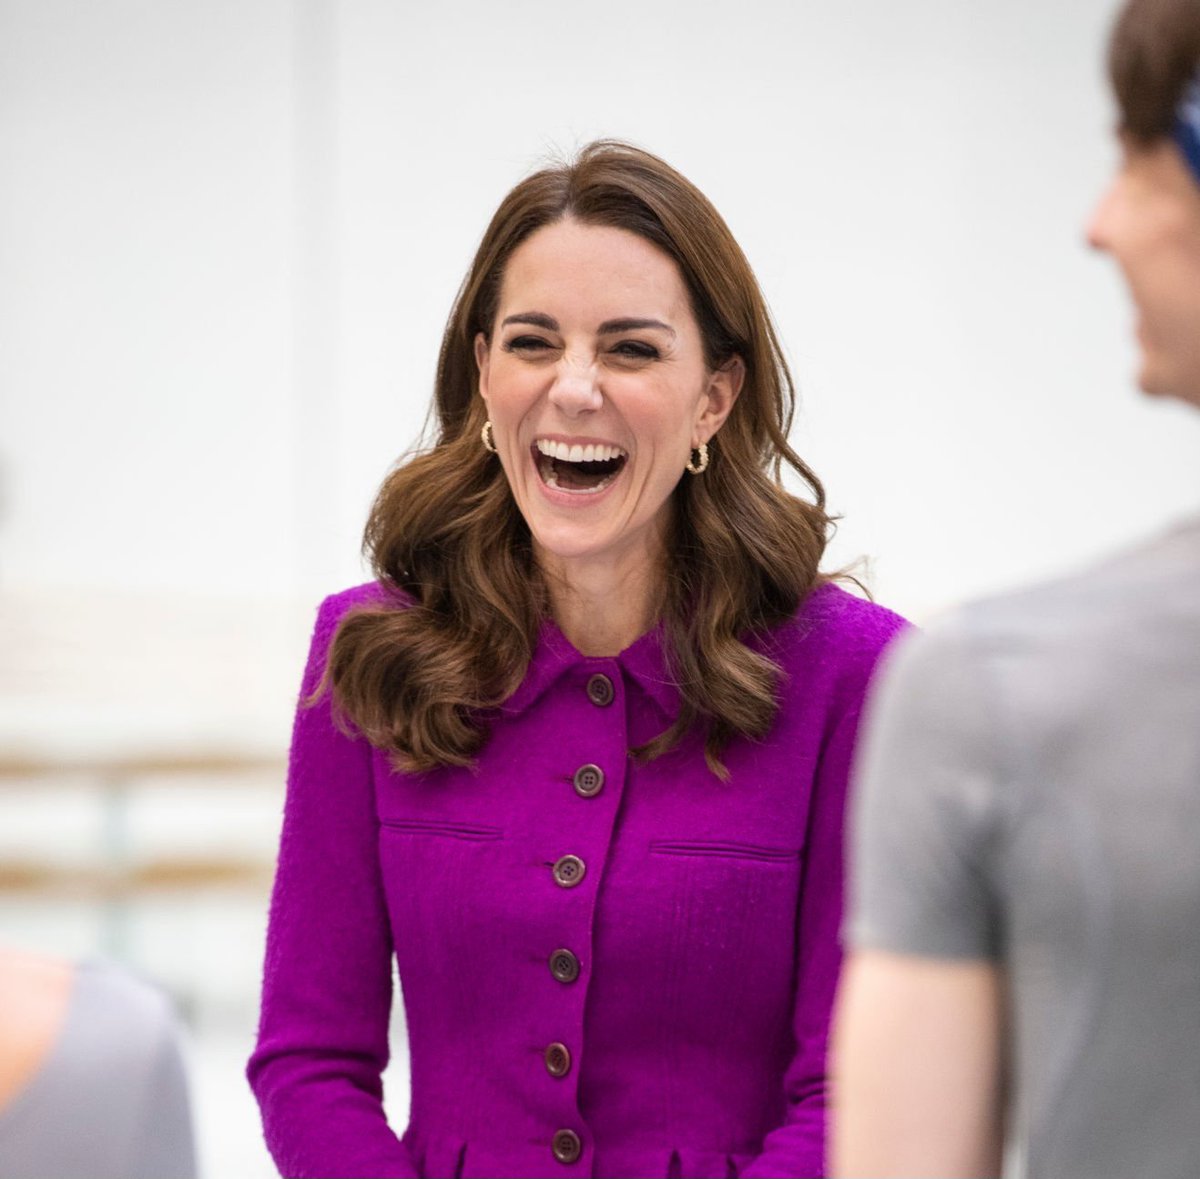 Her laugh!!
#princessofwales #princewilliam #princeofwales #princesscatherine #katemiddleton #duchessofcambridge